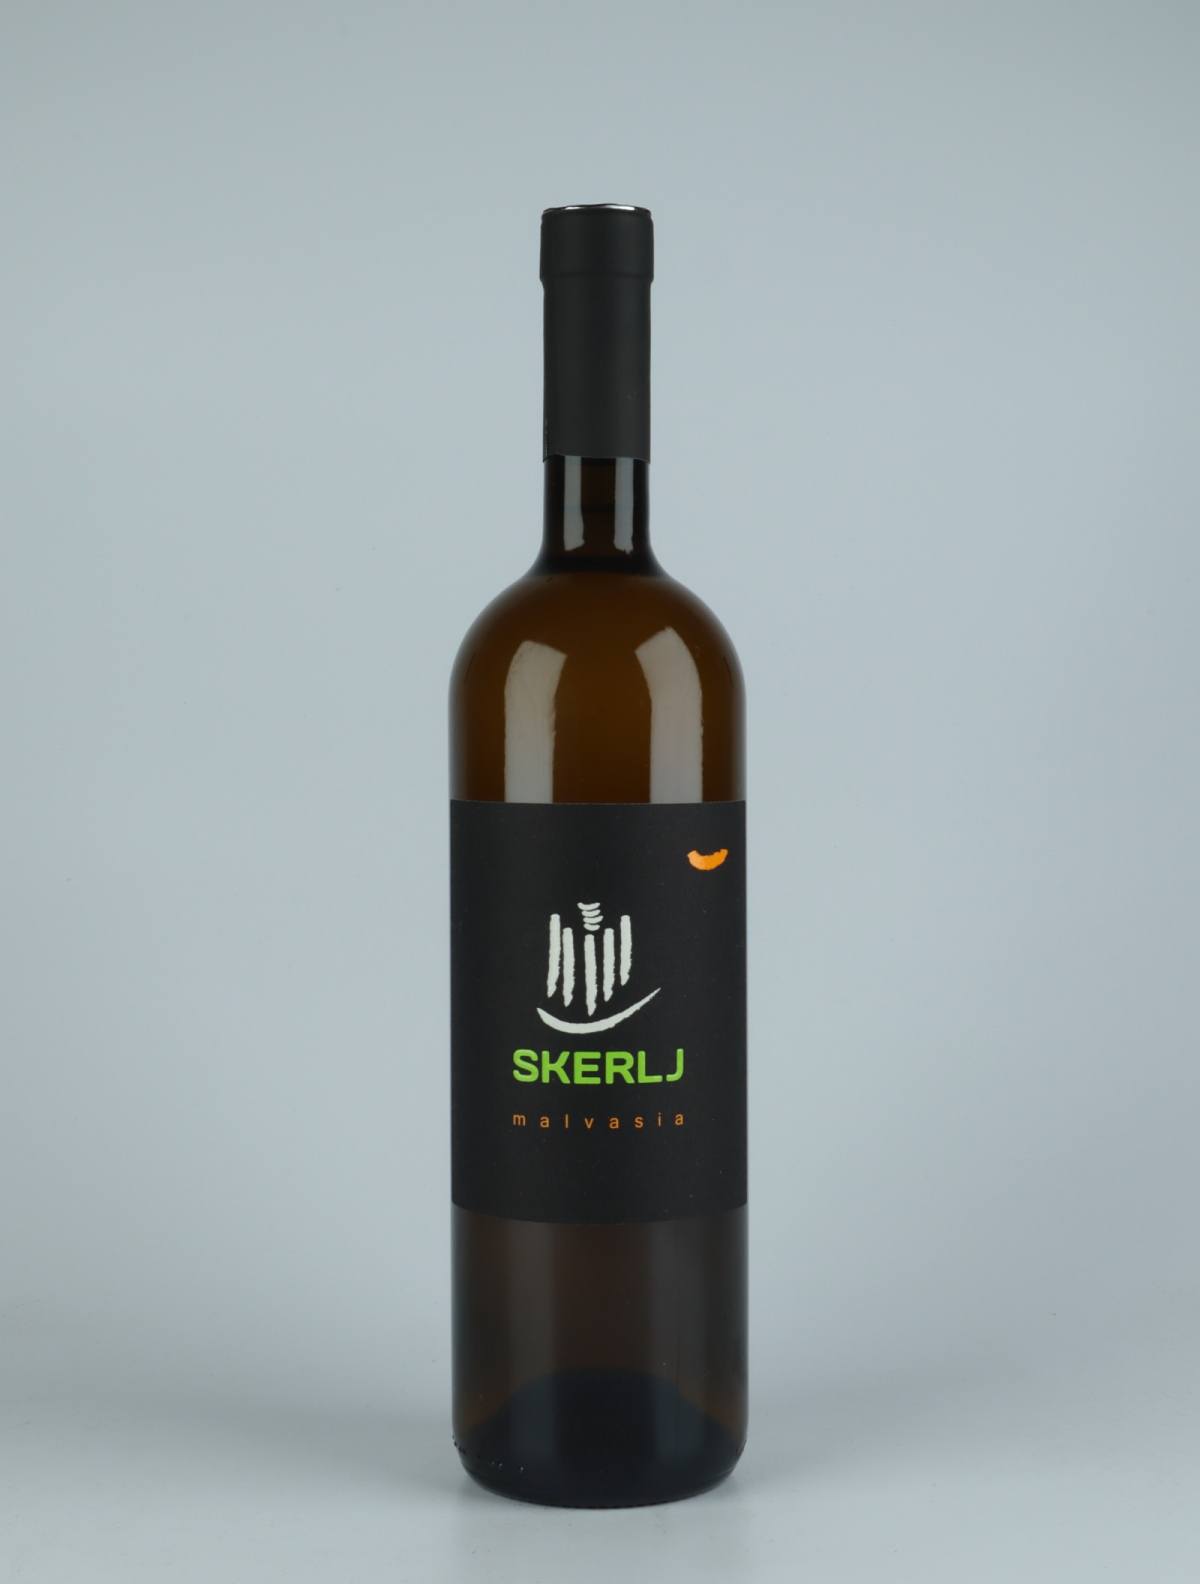 A bottle 2018 Malvasia Orange wine from Skerlj, Friuli in Italy